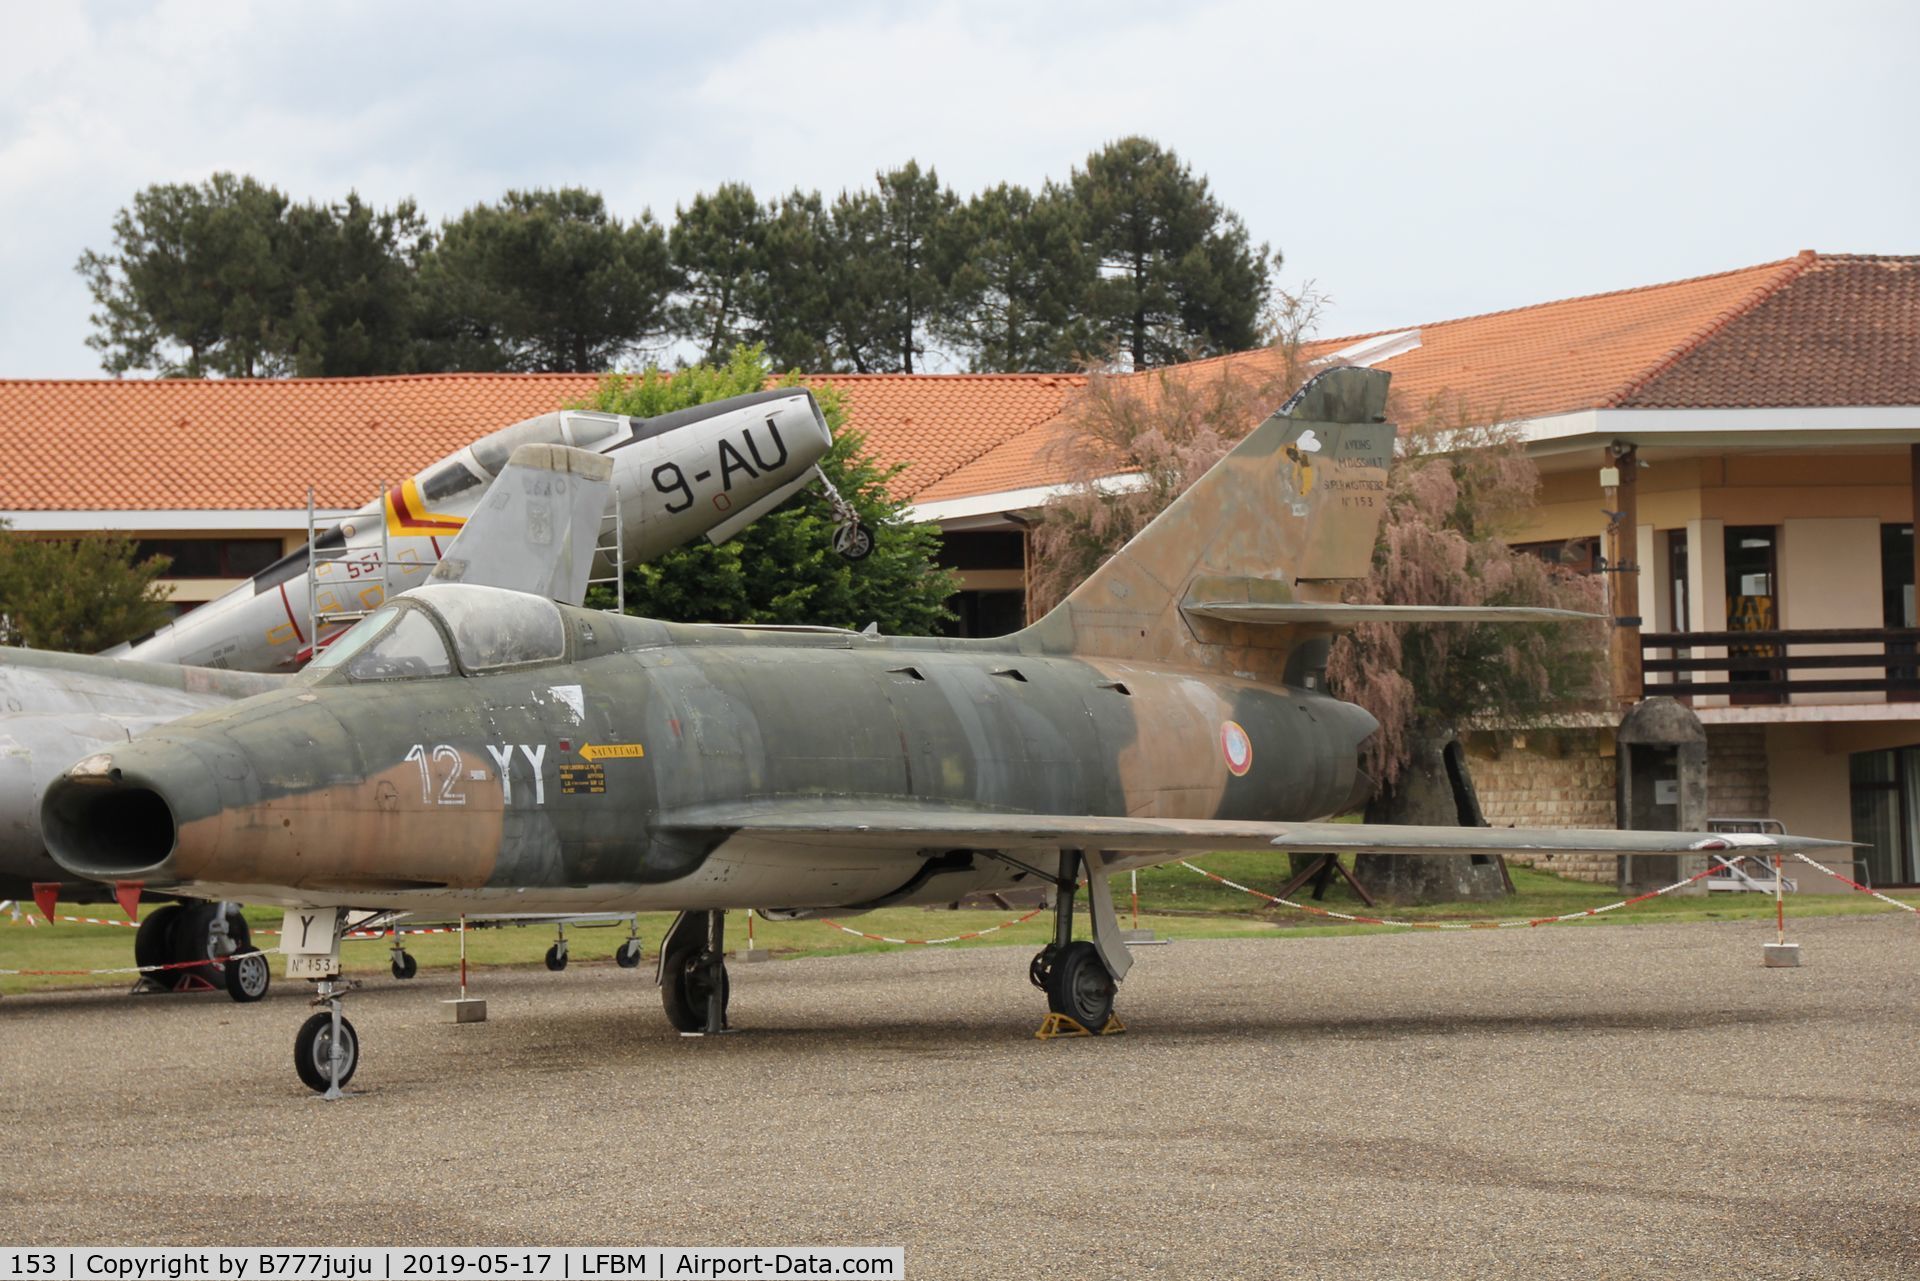 153, Dassault Super Mystere B.2 C/N 153, at Mont-de-Marsan AB museum, ex CICDA